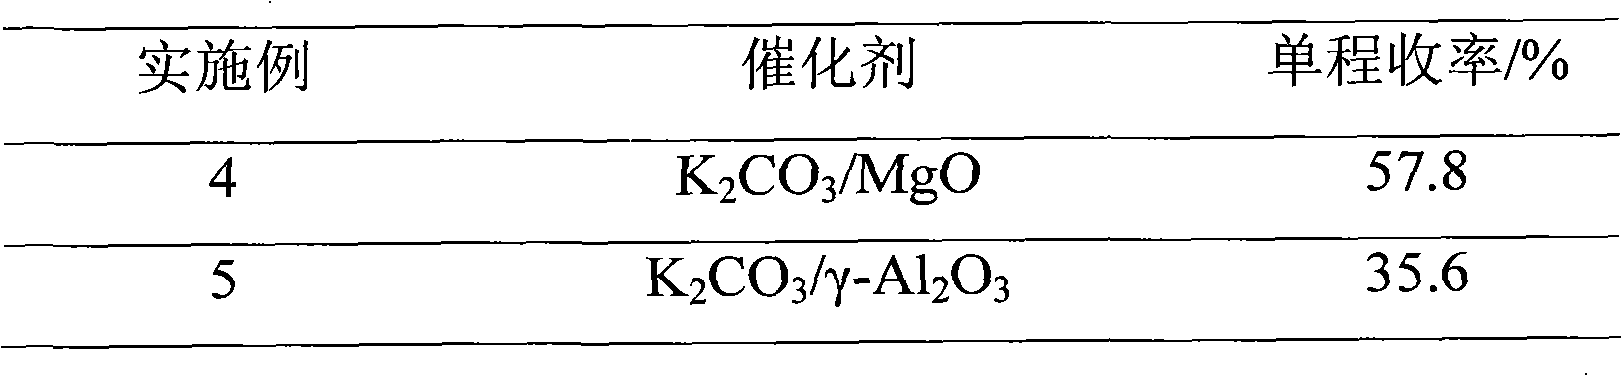 Method for preparing 2,2,4-trimethyl-1,3-pentanediol single-isobutyrate